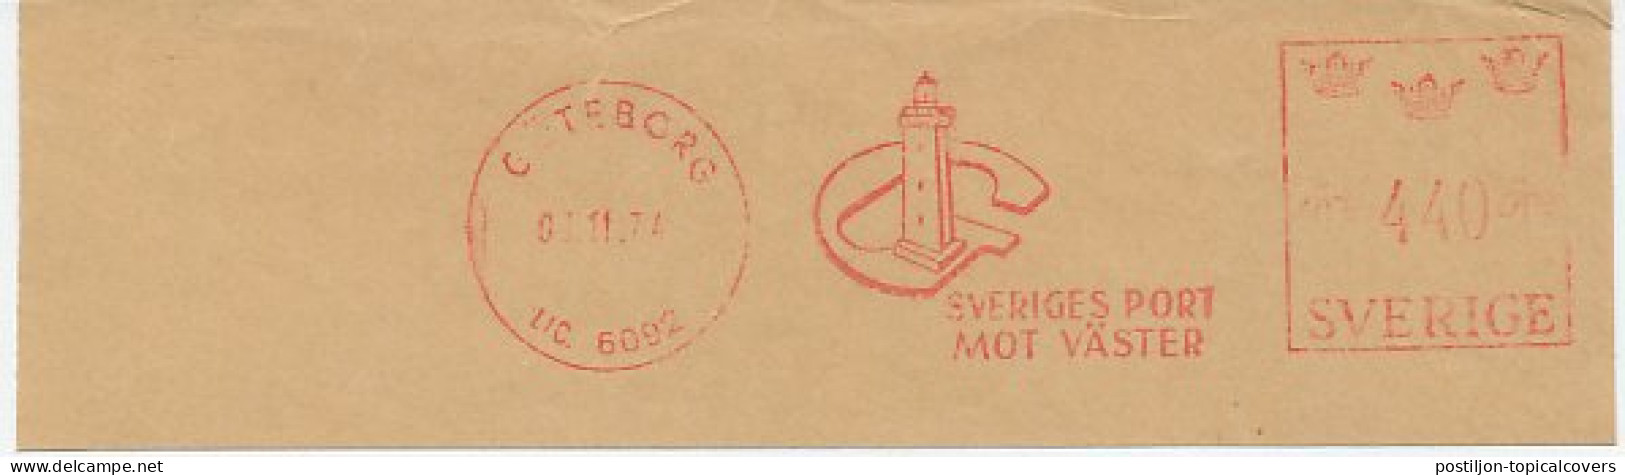 Meter Cut Sweden 1974 Lighthouse - Goteborg - Fari